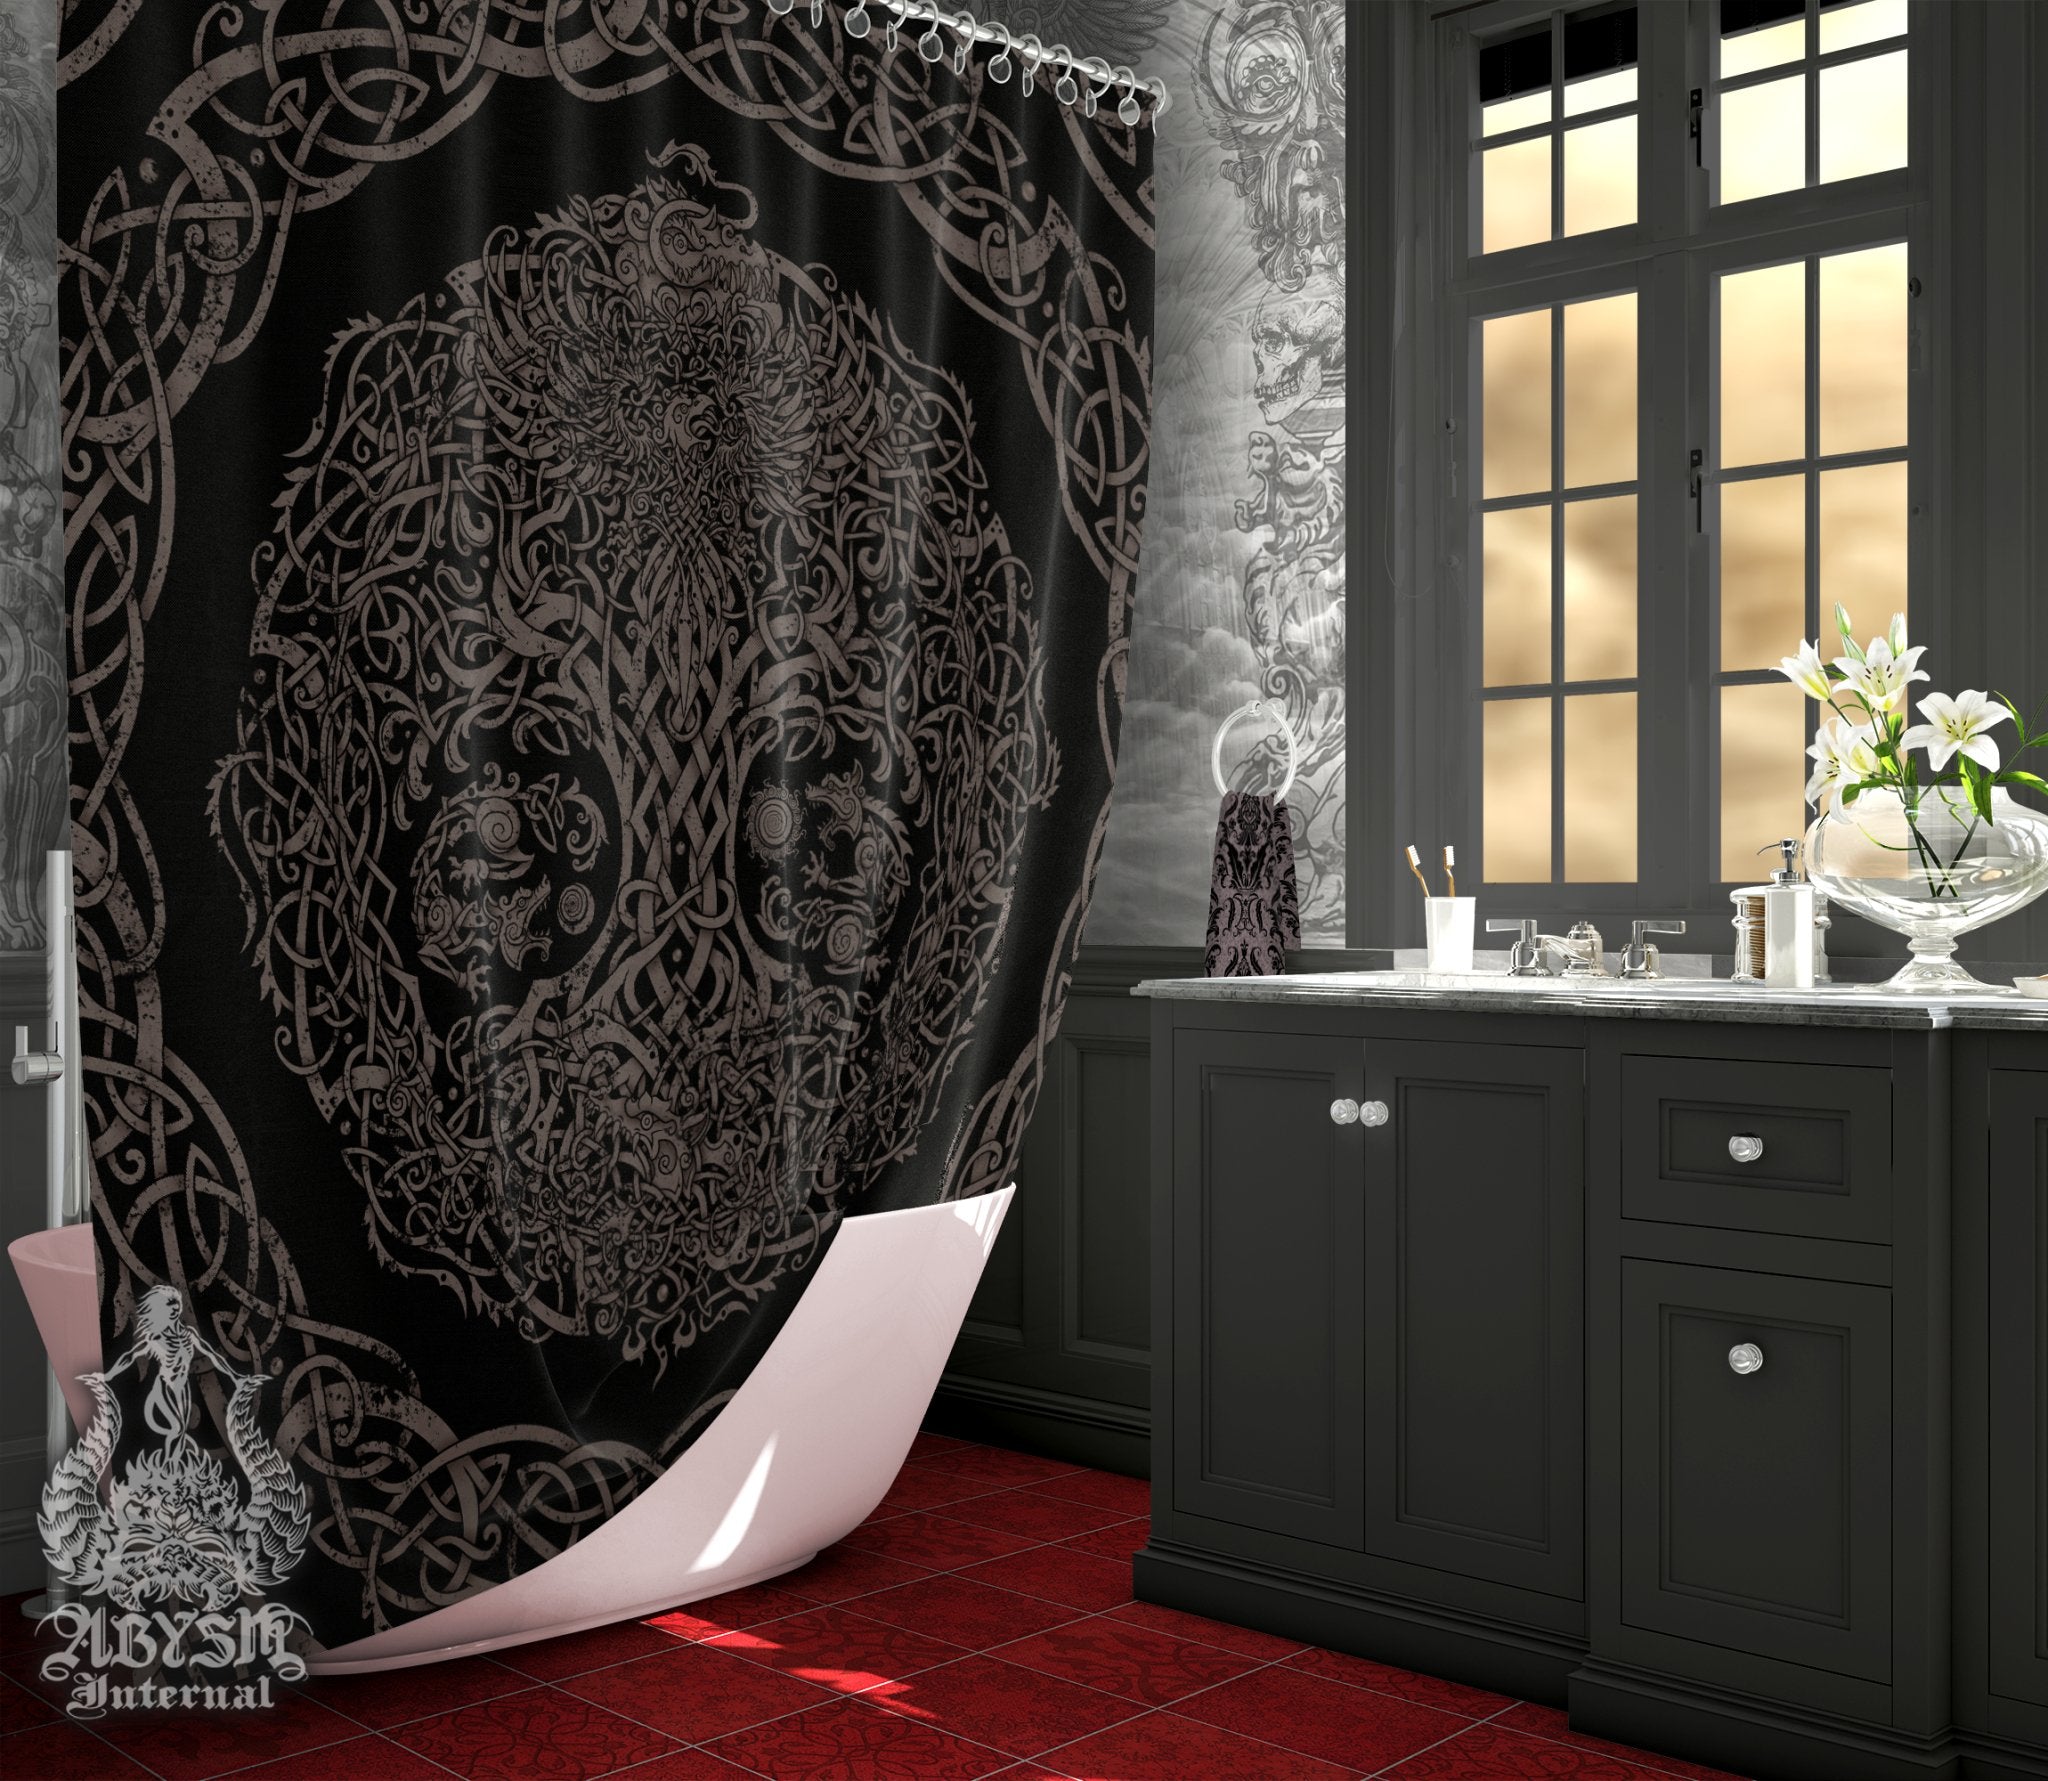 Viking Shower Curtain, 71x74 inches, Yggdrasil, Norse Mythology Bathroom Decor, Tree of Life - Black Grey Grit - Abysm Internal